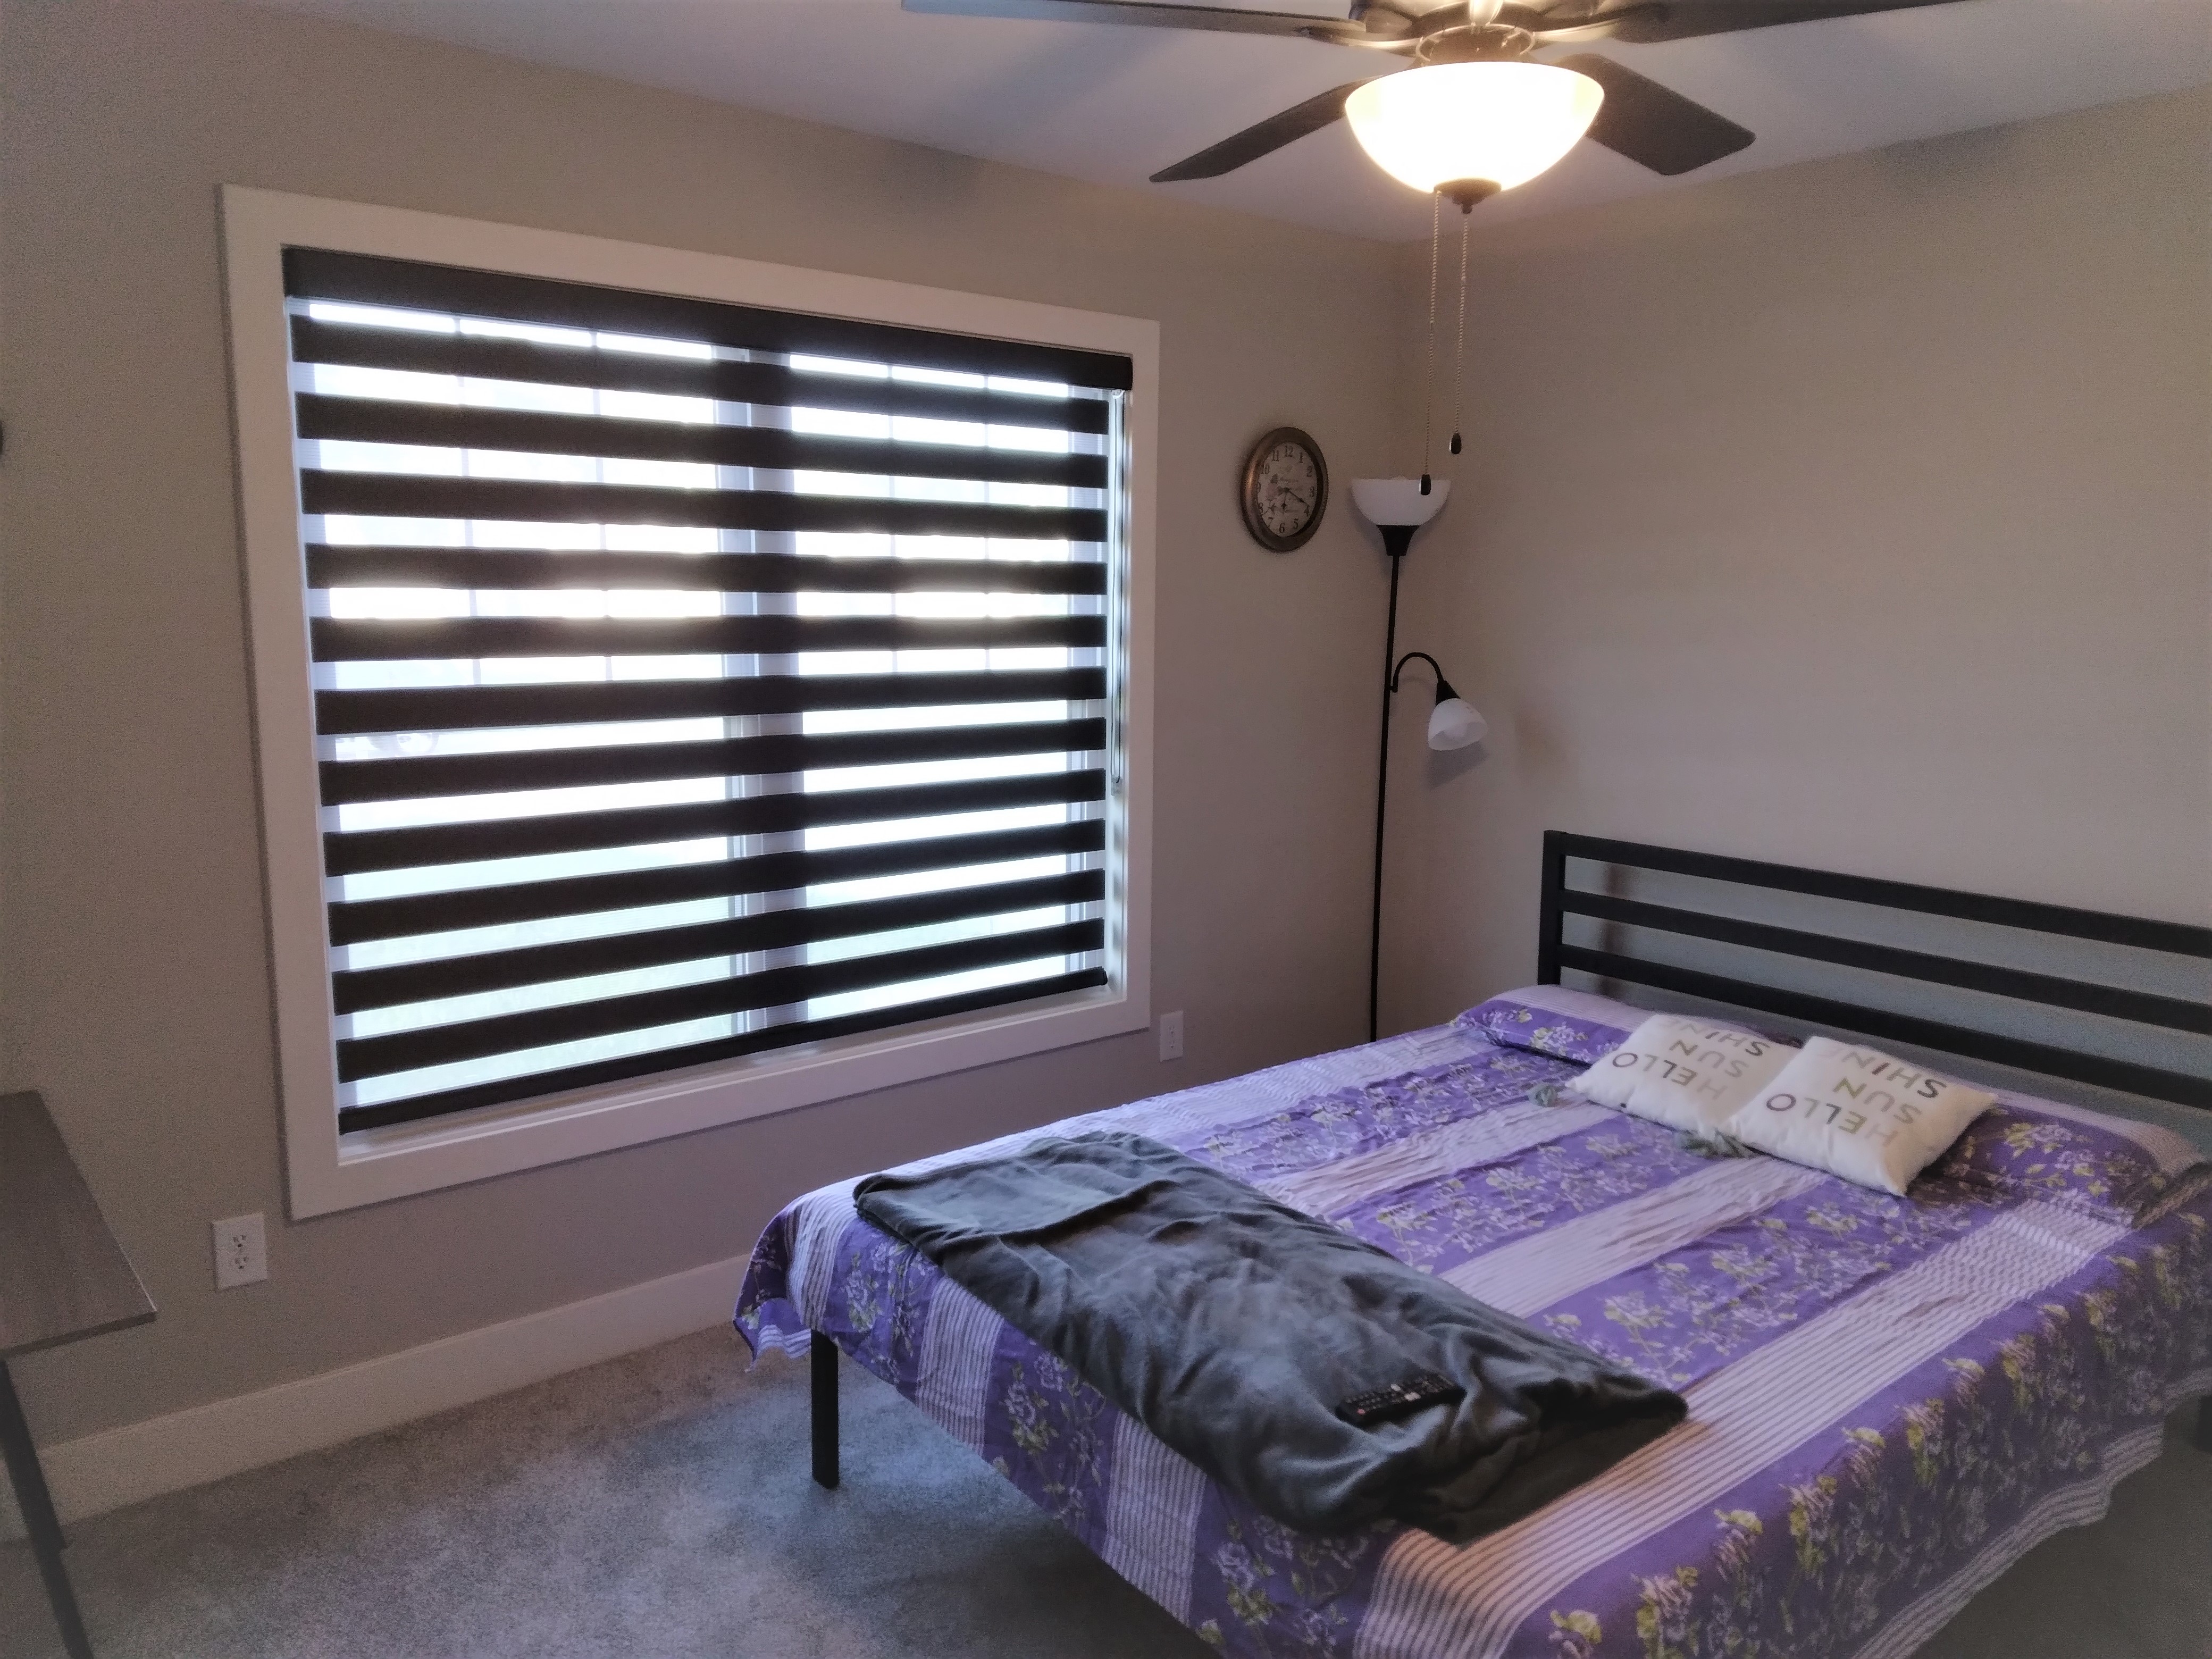 Black dual sheer shades in Springfield Illinois bedroom.  BudgetBlinds  WindowCoverings  DualSheerShades  SpringfieldIllinois